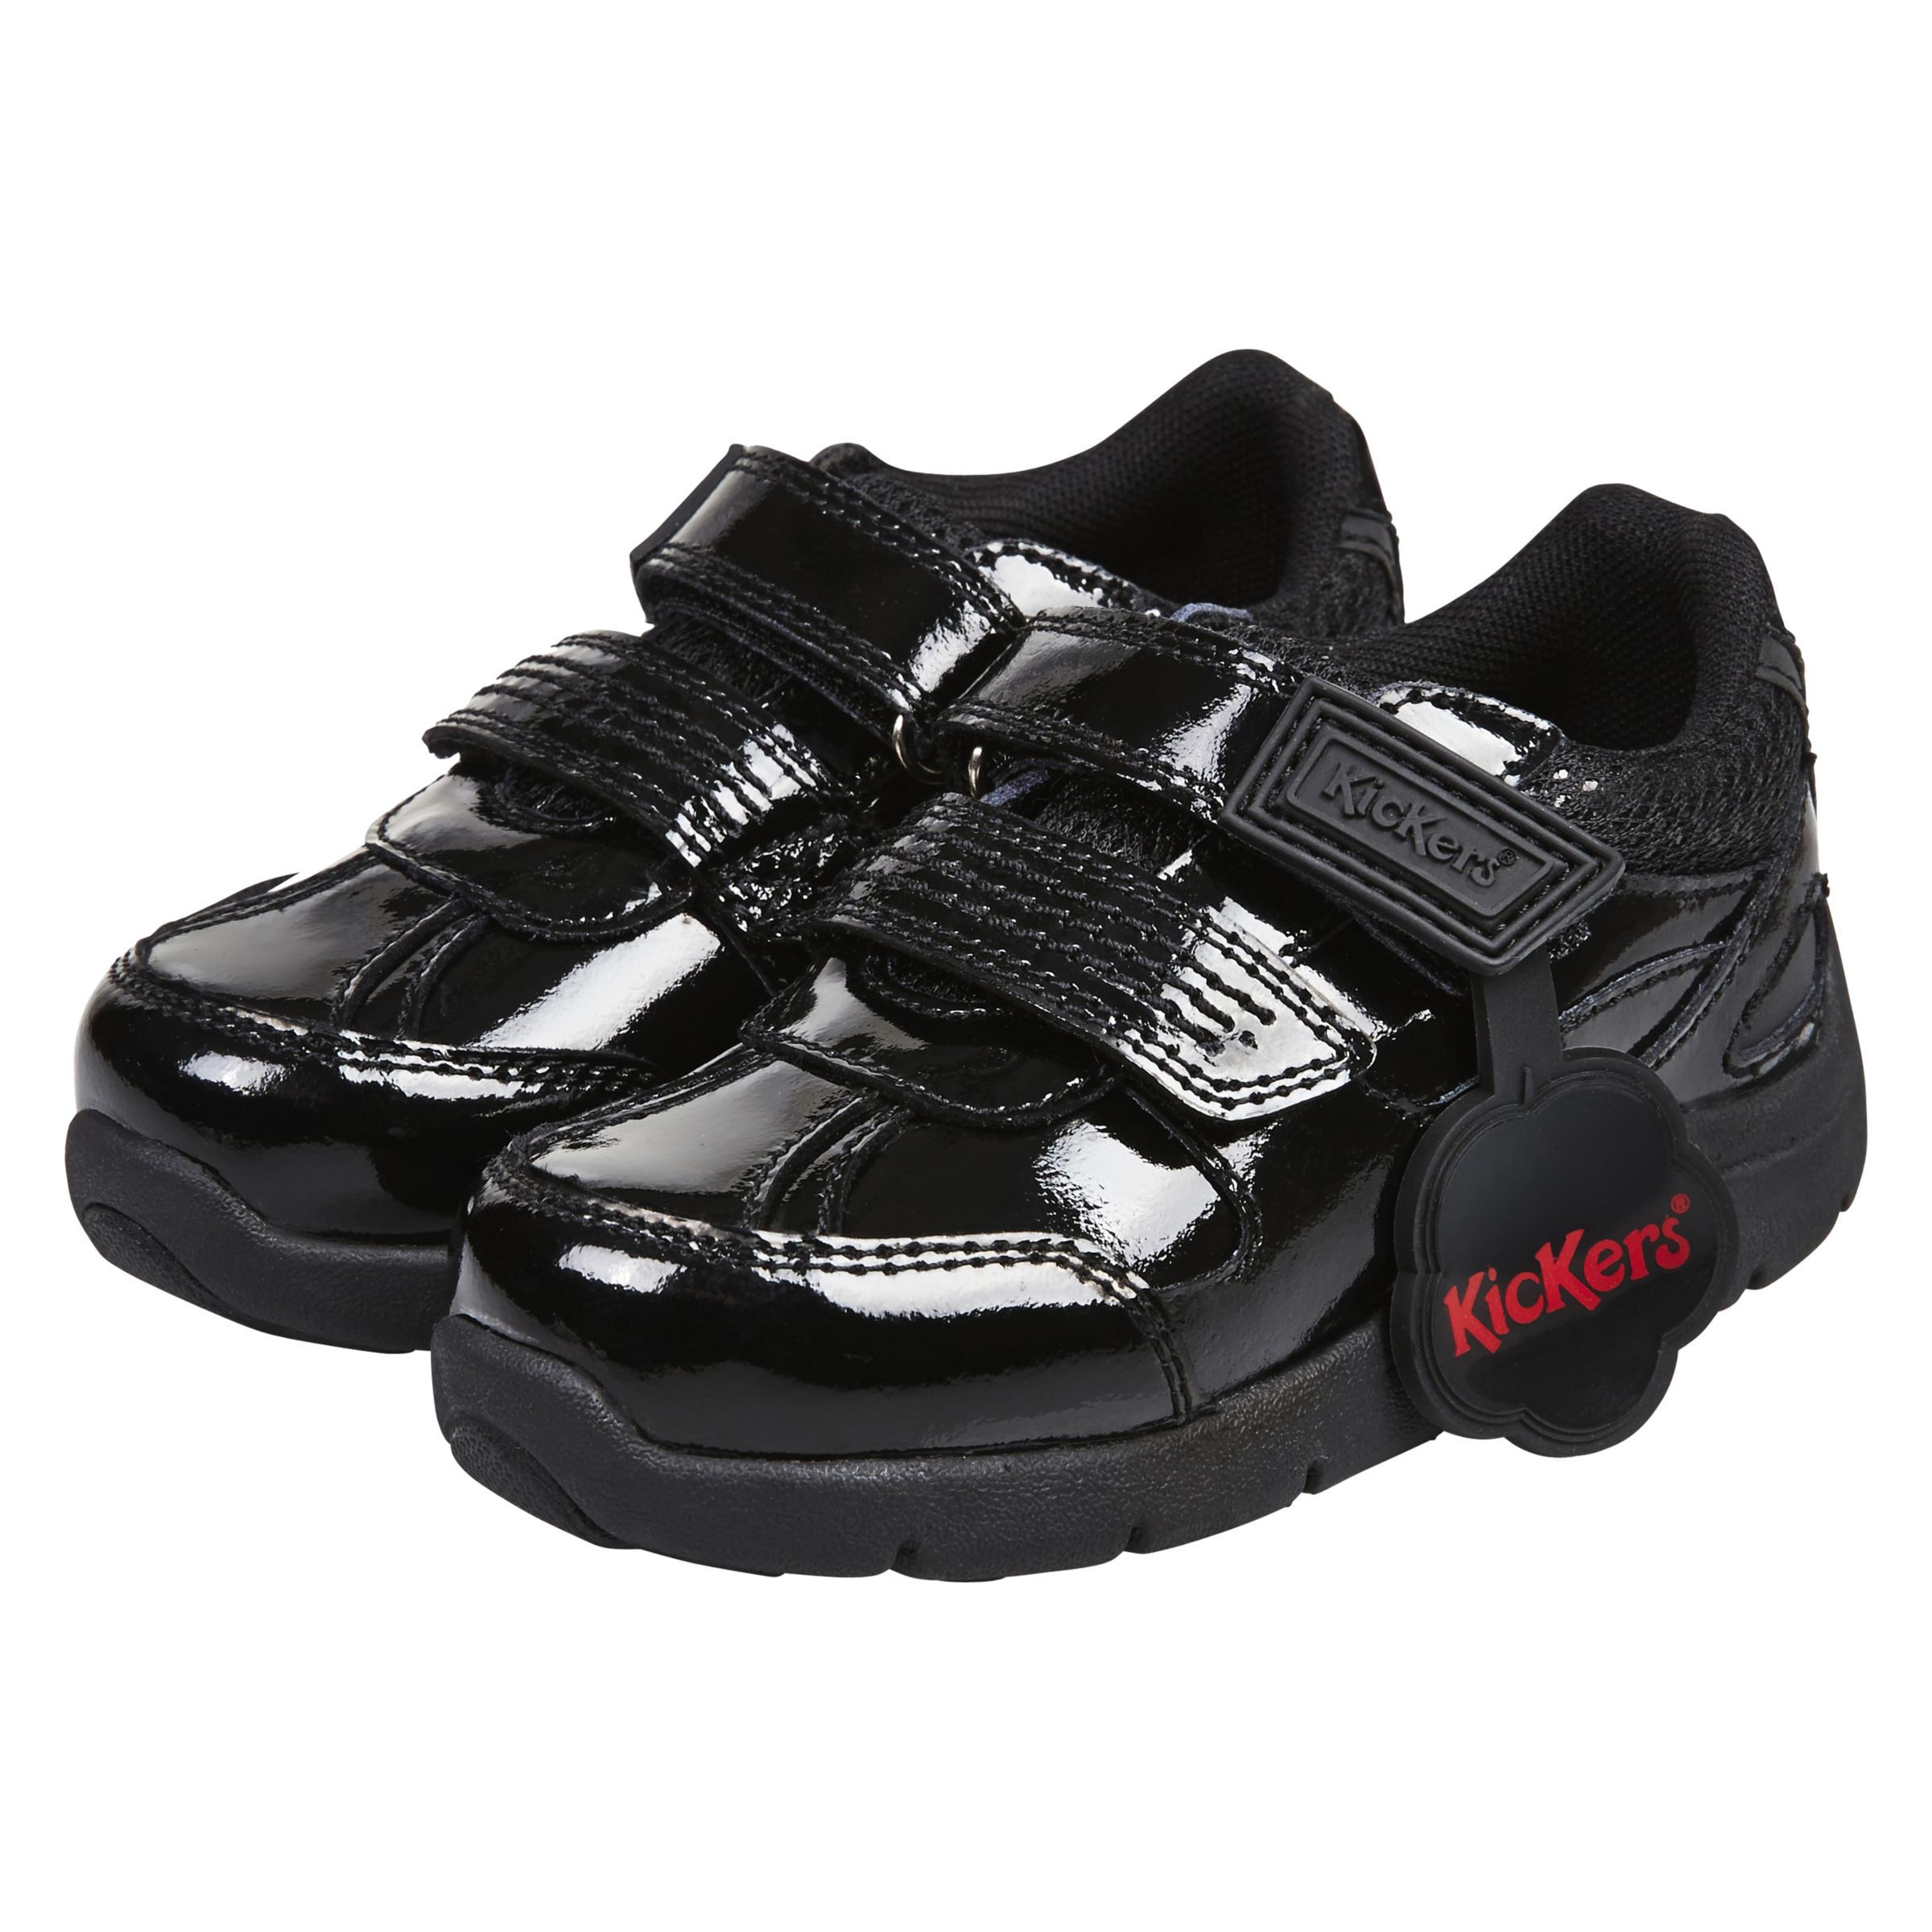 Kickers Children's Moakie Reflex Shoes, Black Patent, 25